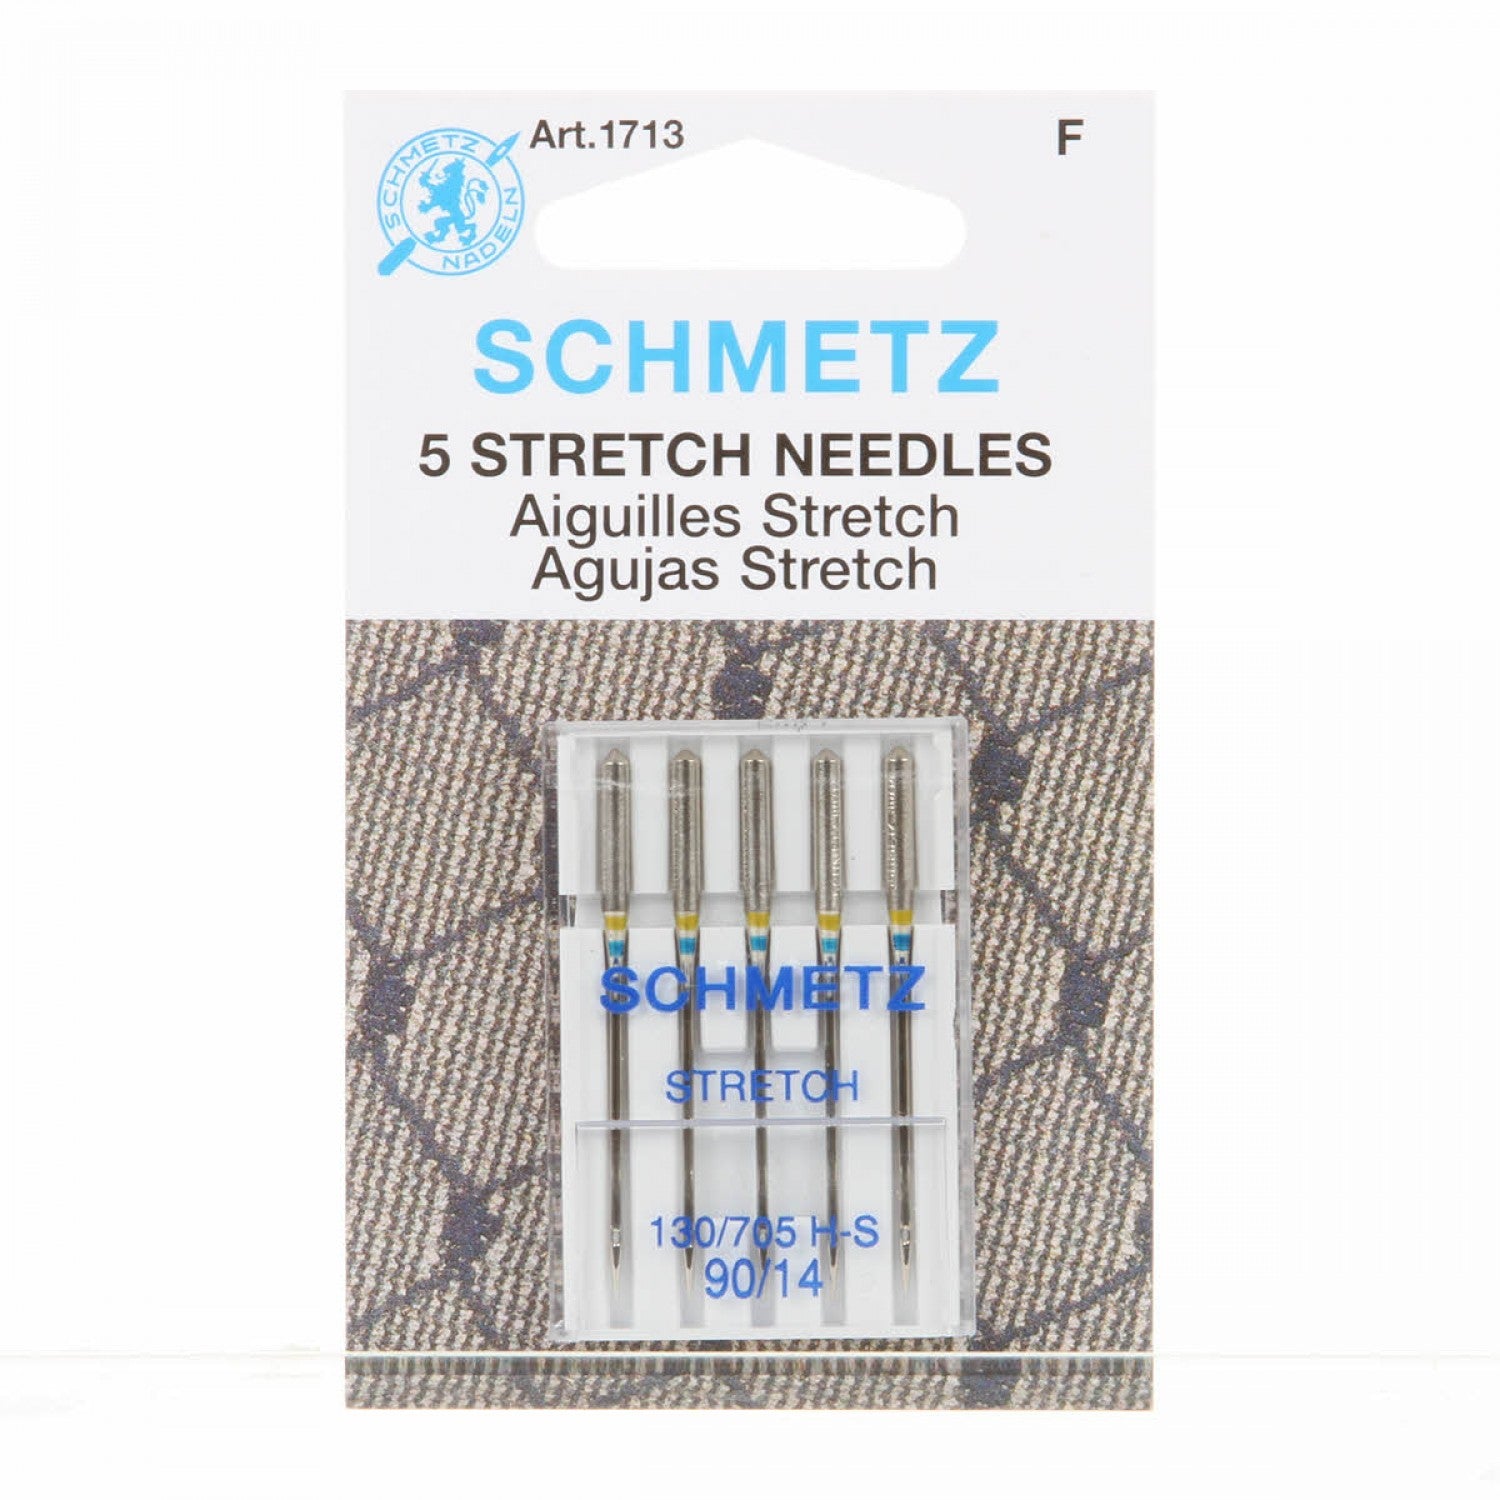 Schmetz Stretch Needle - 90/14 - 1 Package of 5 Needles